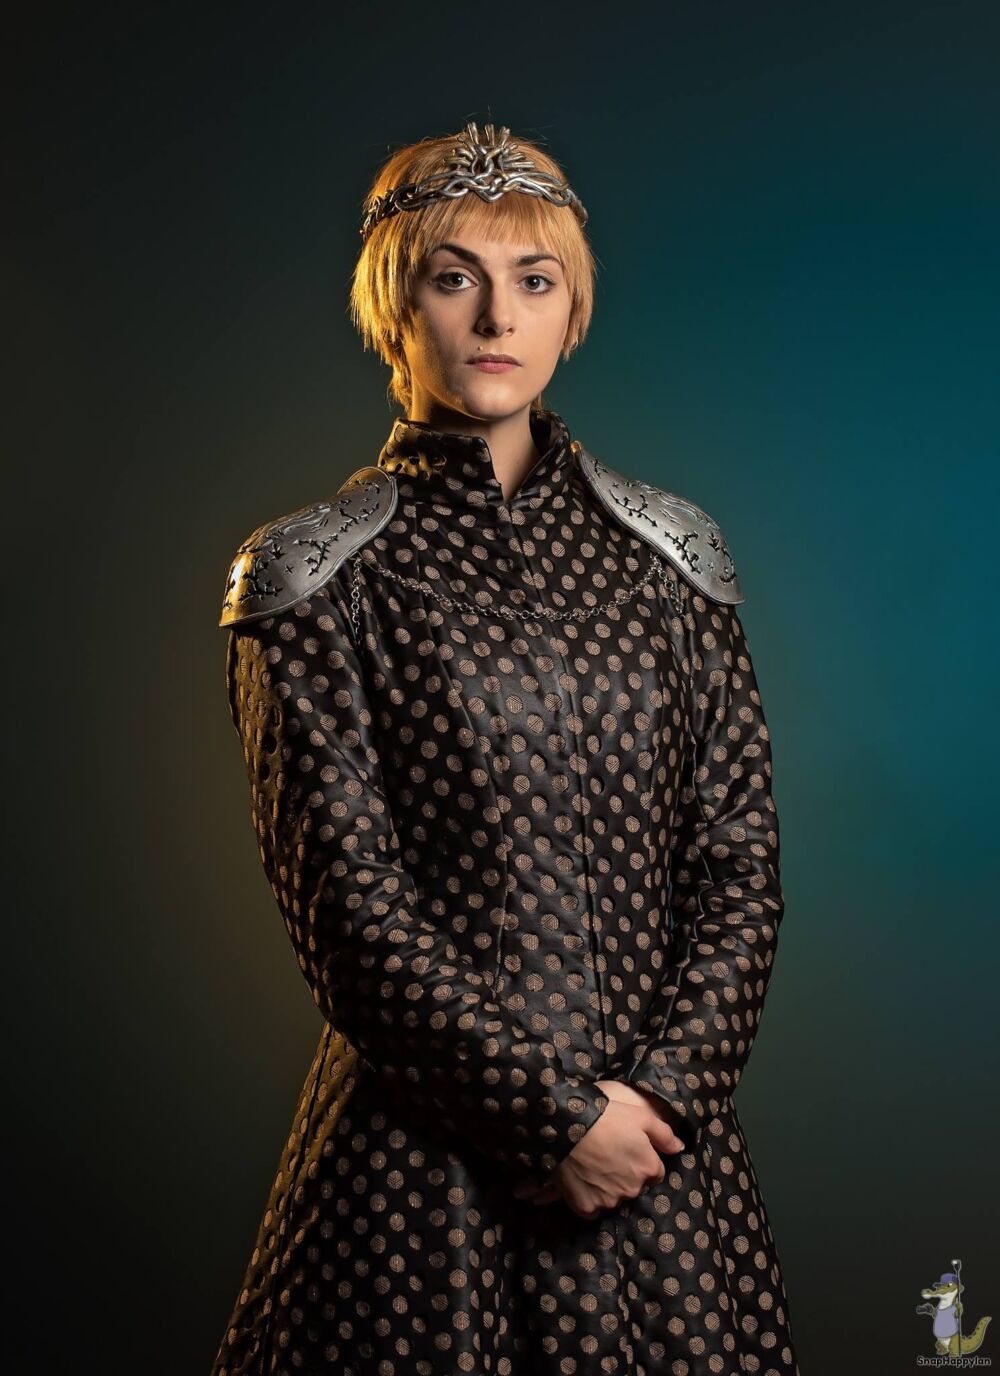 Queen Cersei